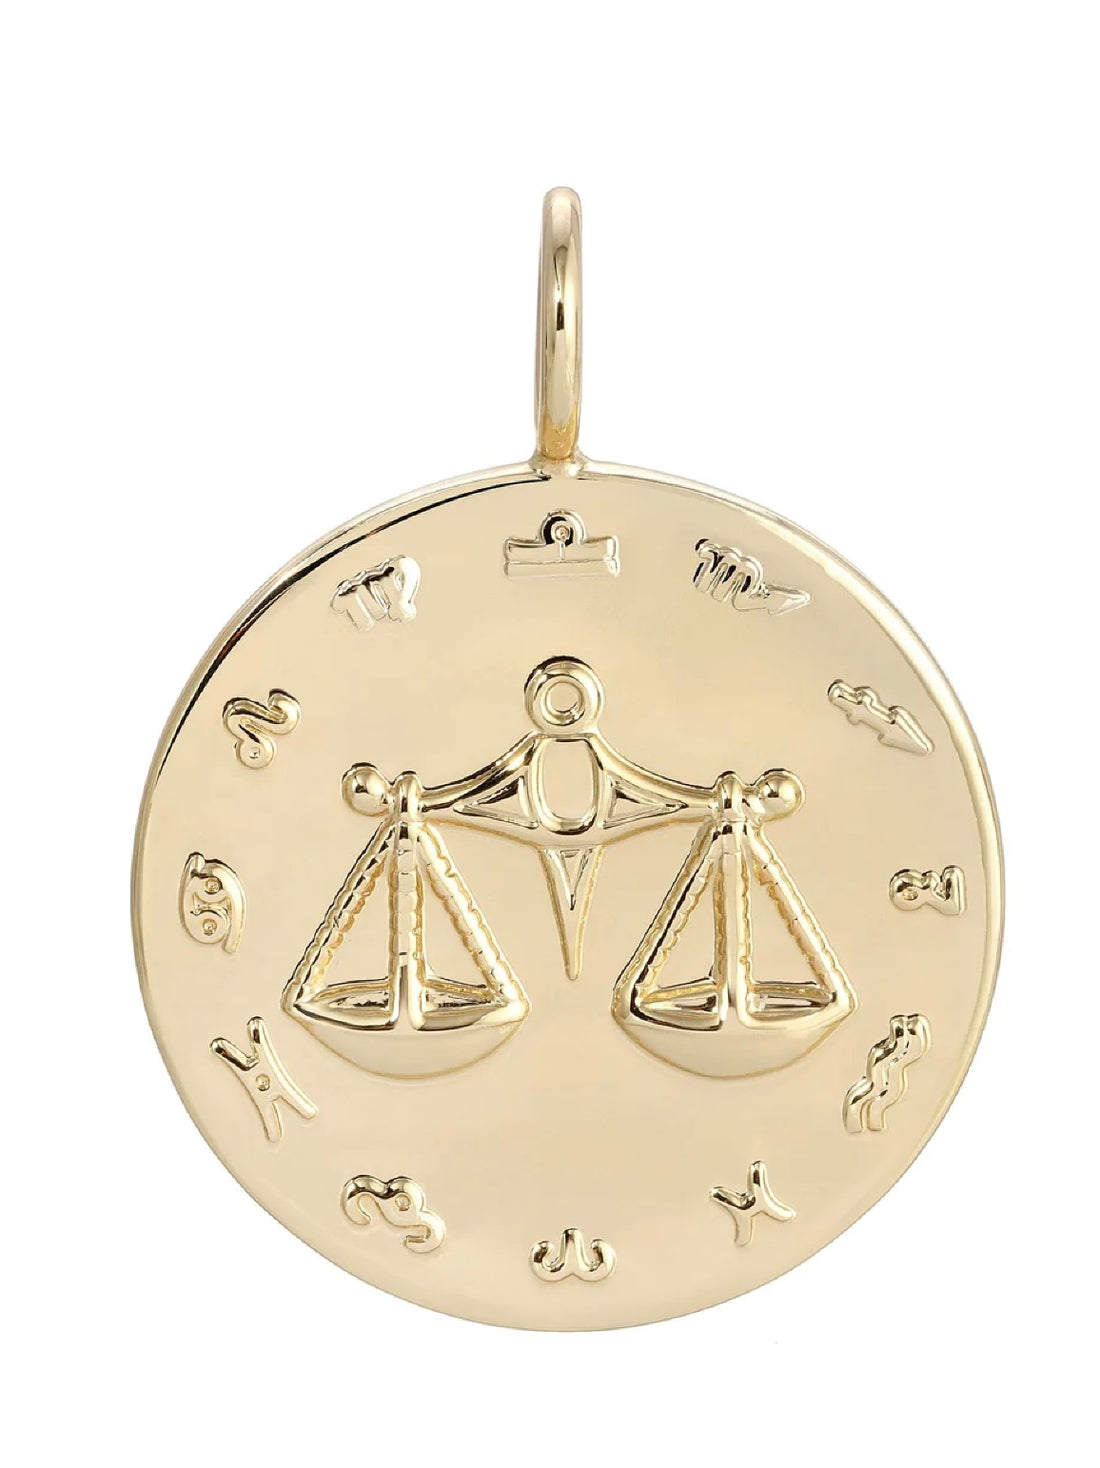 Zodiac Pendant Charm in Gold - Libra